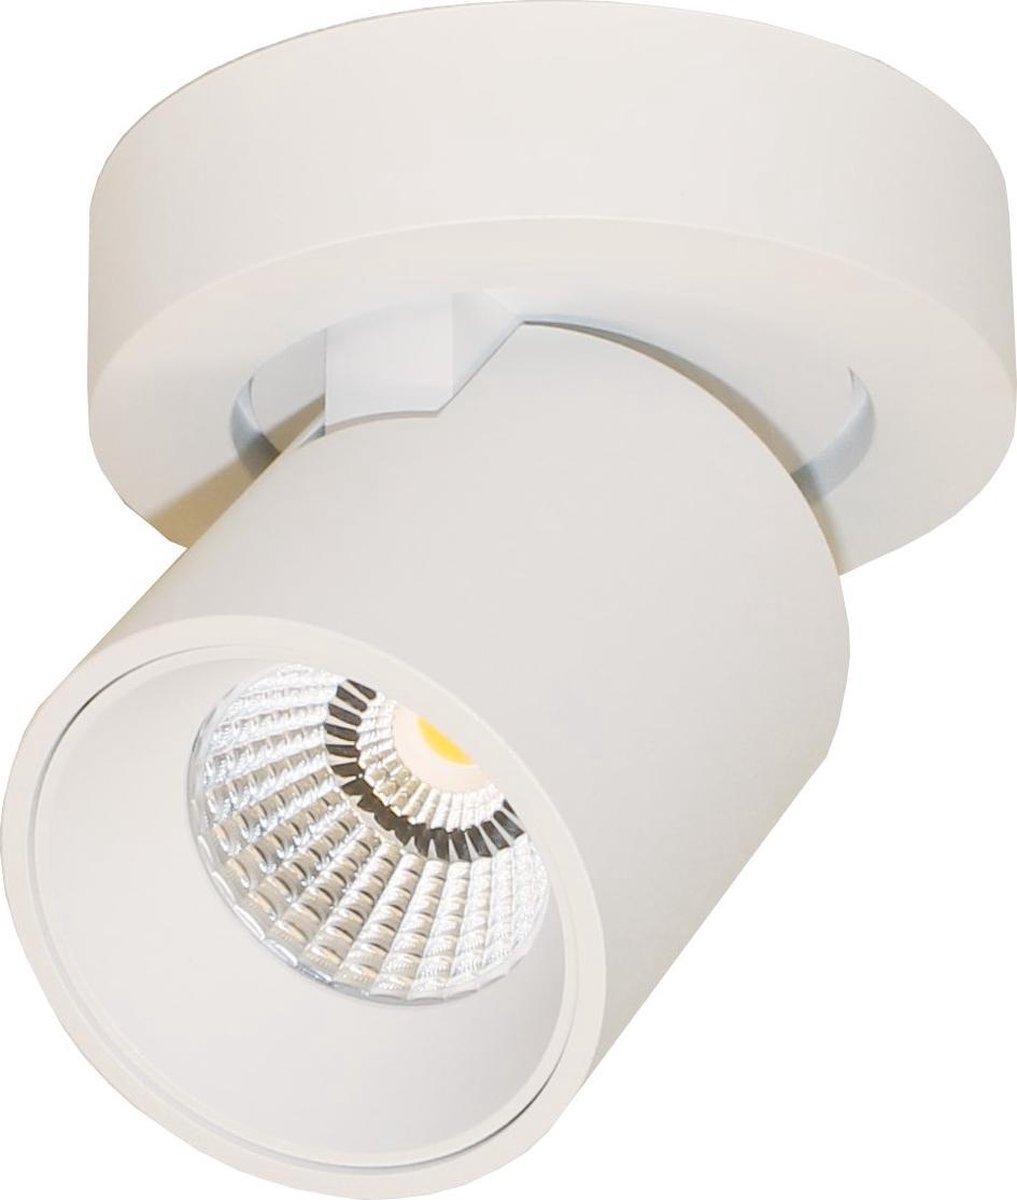 Plafondlamp Laguna 1L Rond Wit - LED 6W 2700K 540lm - IP20 - Dimbaar > spots verlichting led wit | opbouwspot led wit | plafondlamp wit | spotje led wit | led lamp wit | design lamp wit